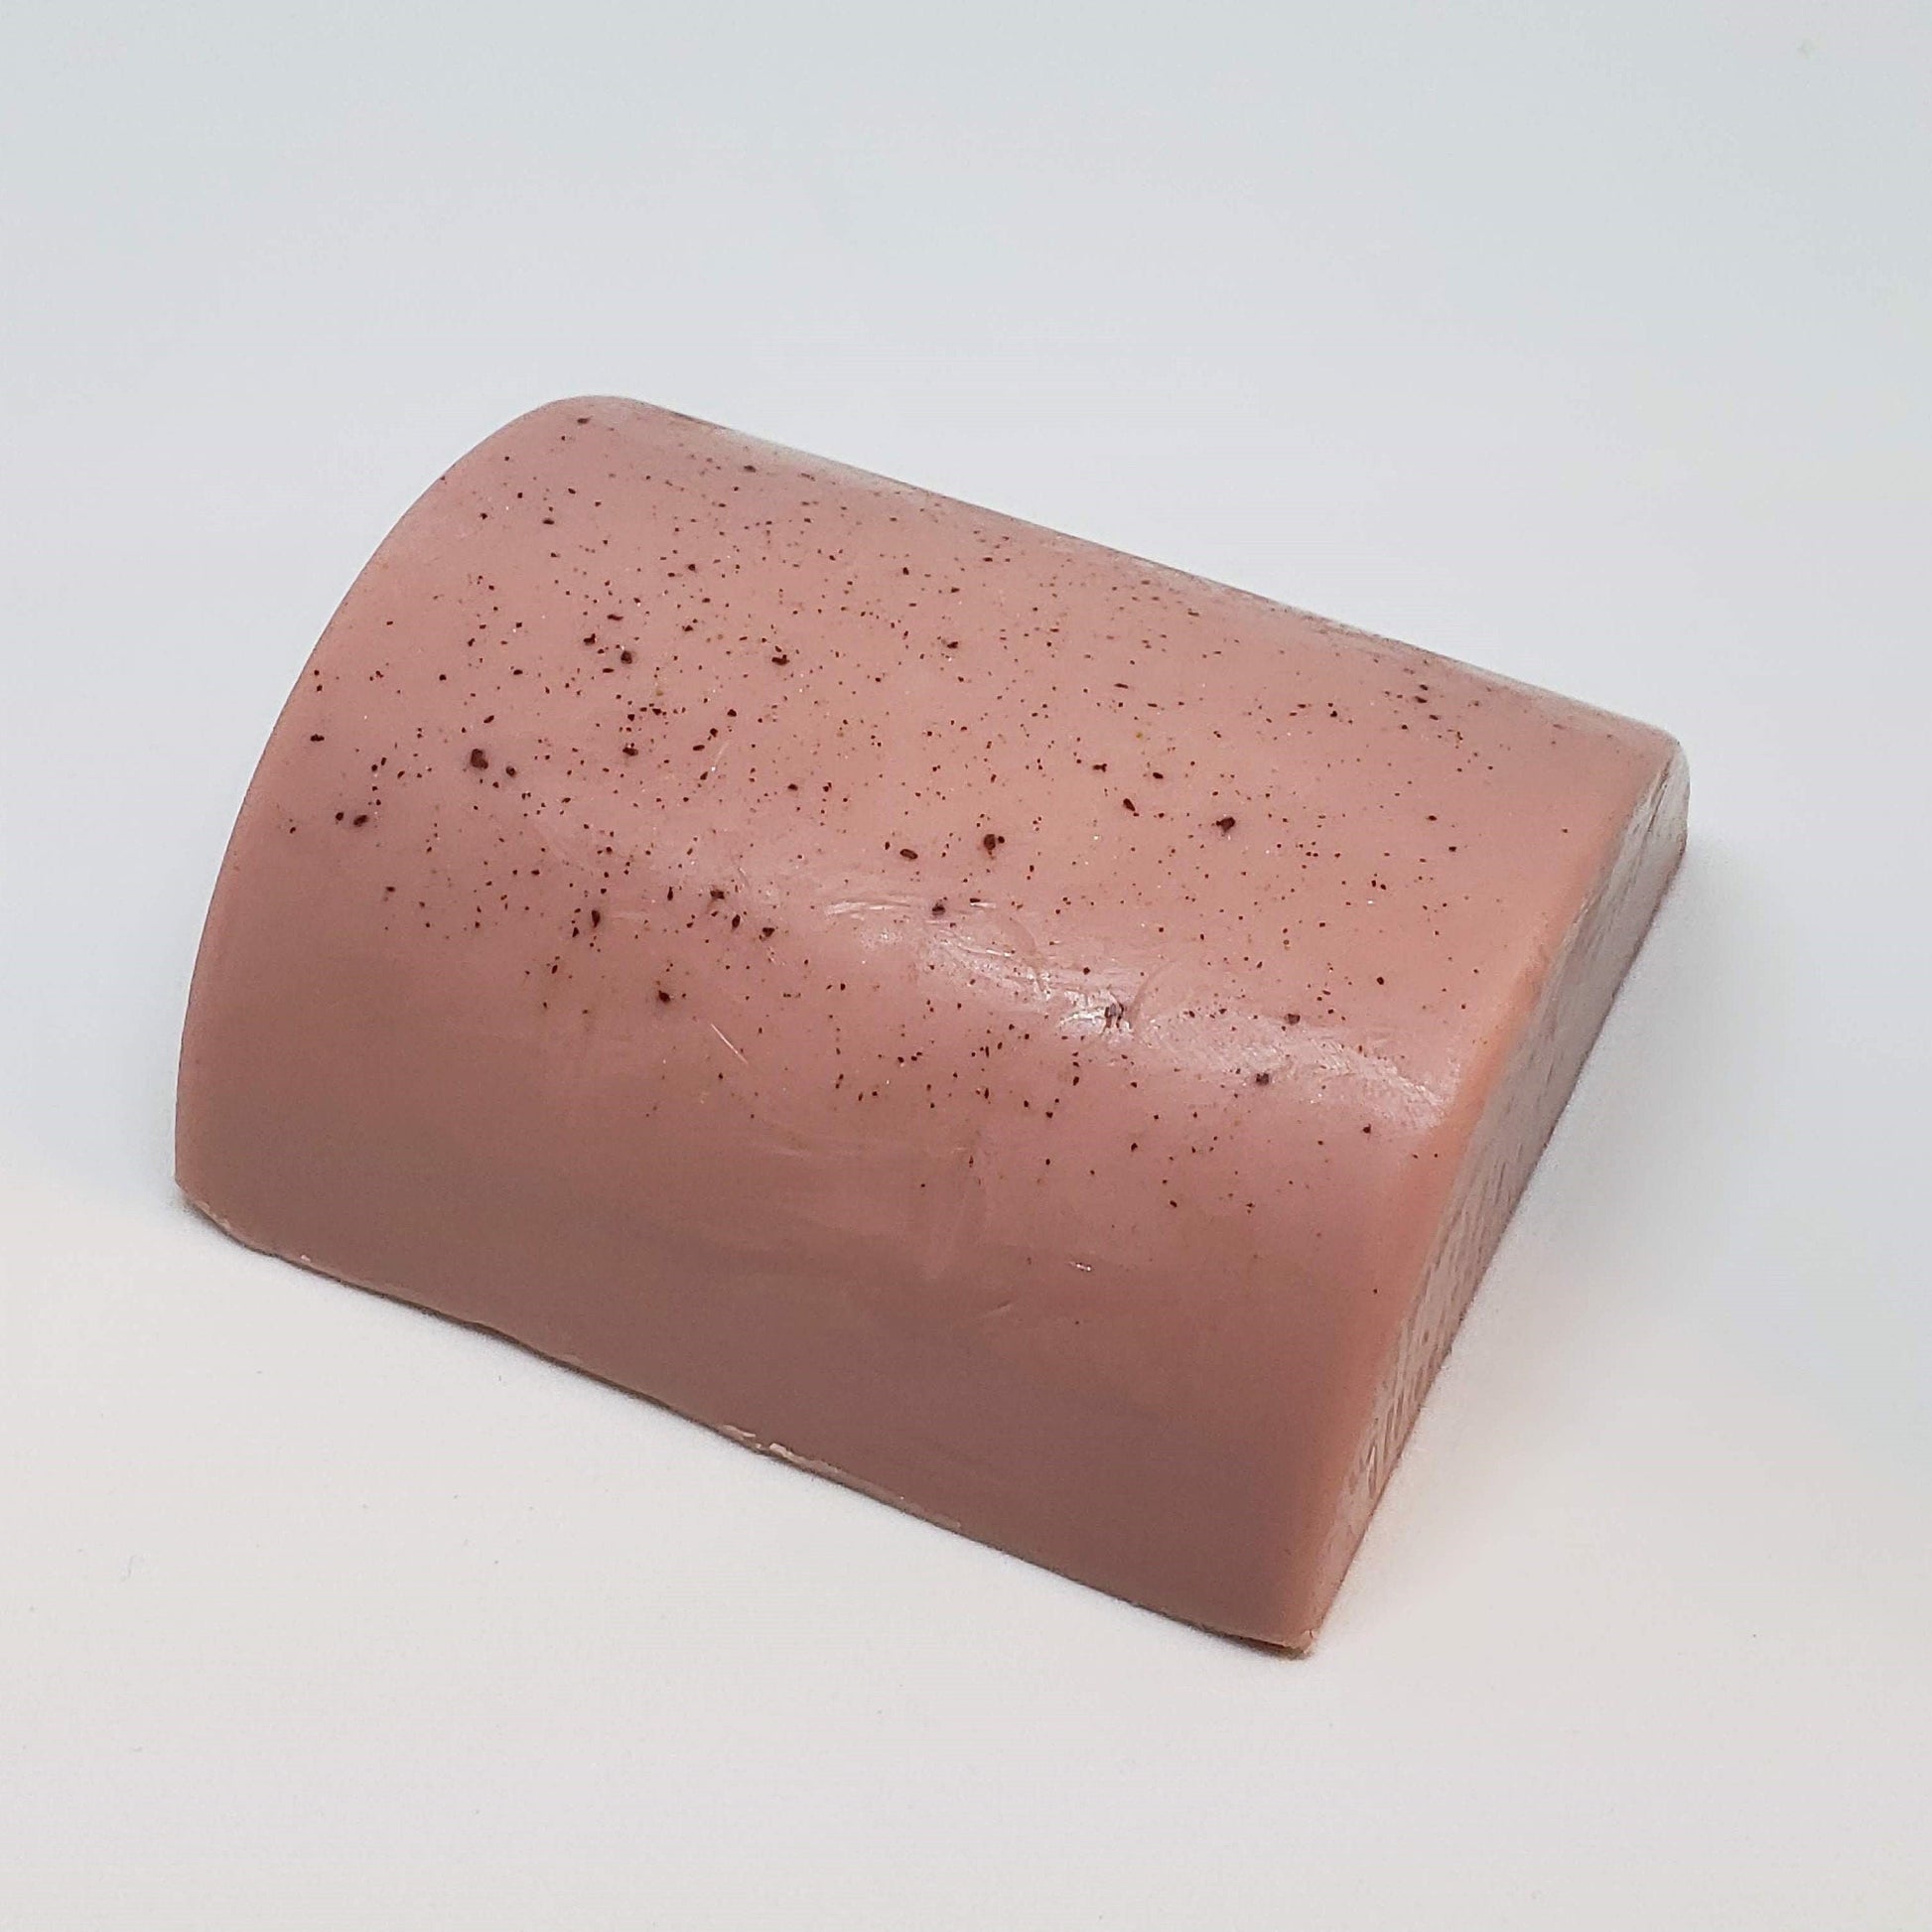 Ivy Creek Rose Kaolin Clay Facial Cleansing Bar | Natural Face Wash | Holistic Skincare | Rose Soap | Kaolin Clay Soap - 4.2 oz